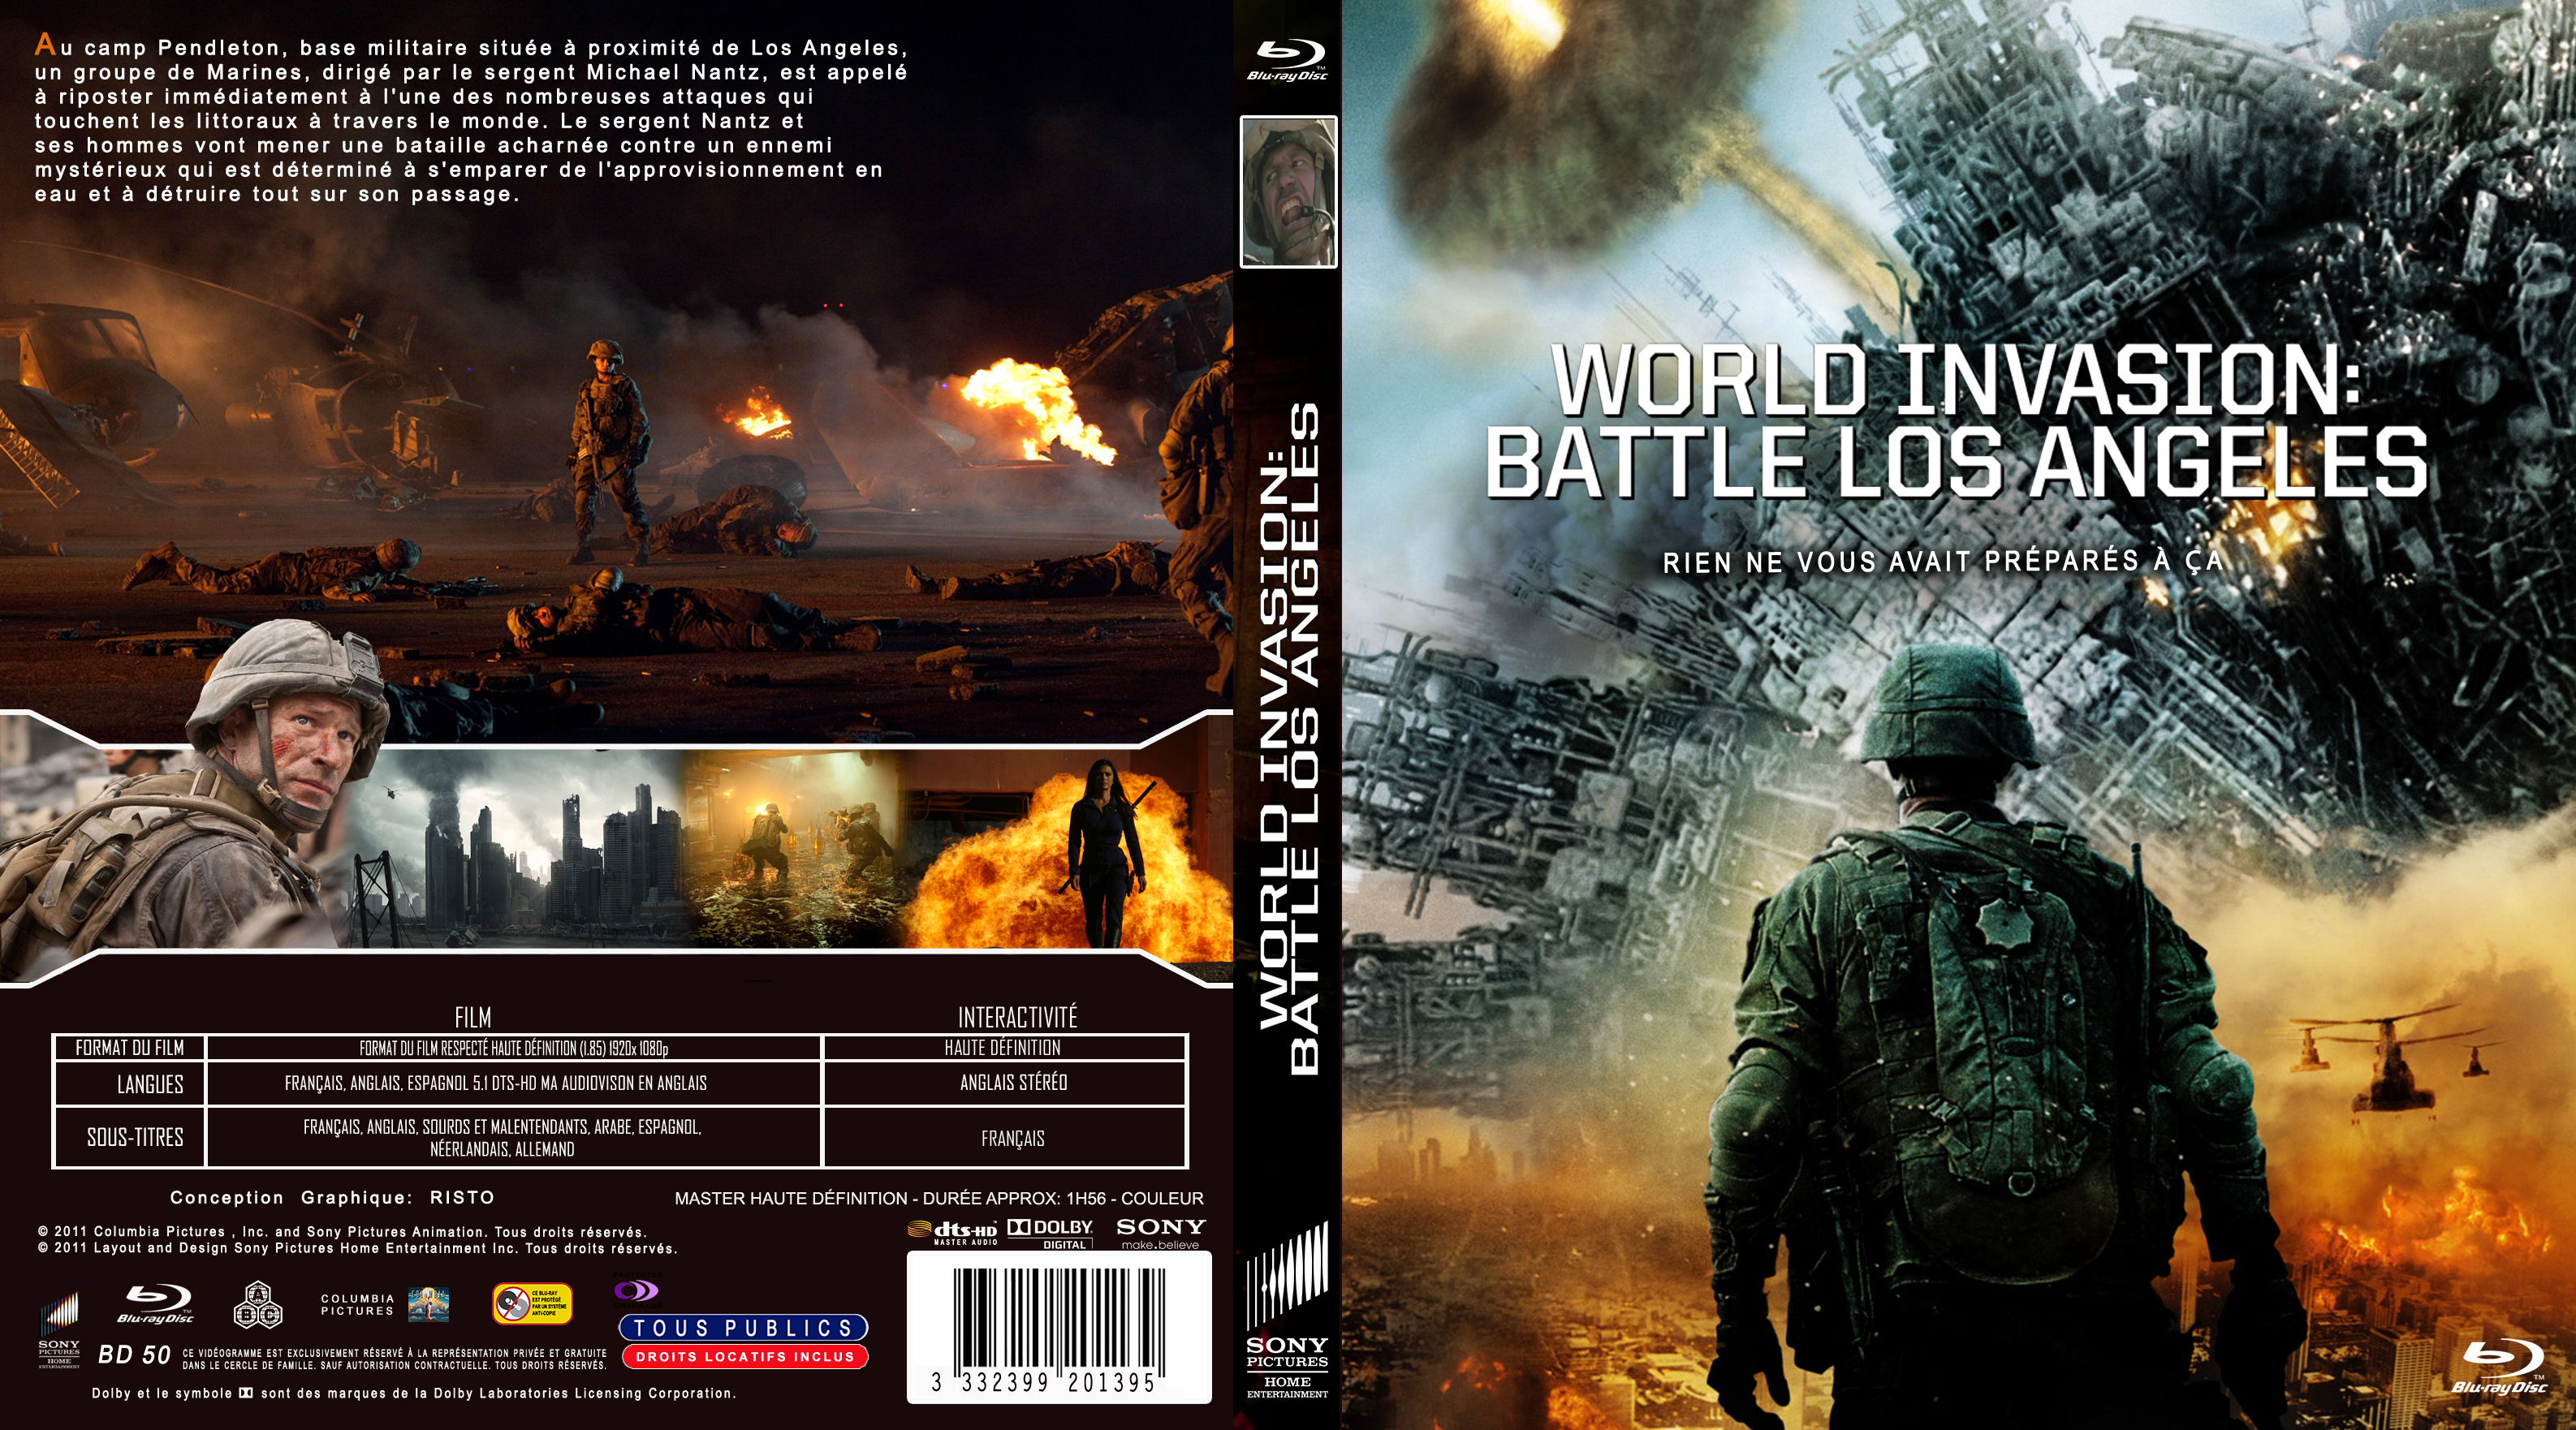 Jaquette DVD World Invasion Battle Los Angeles custom (BLU-RAY)